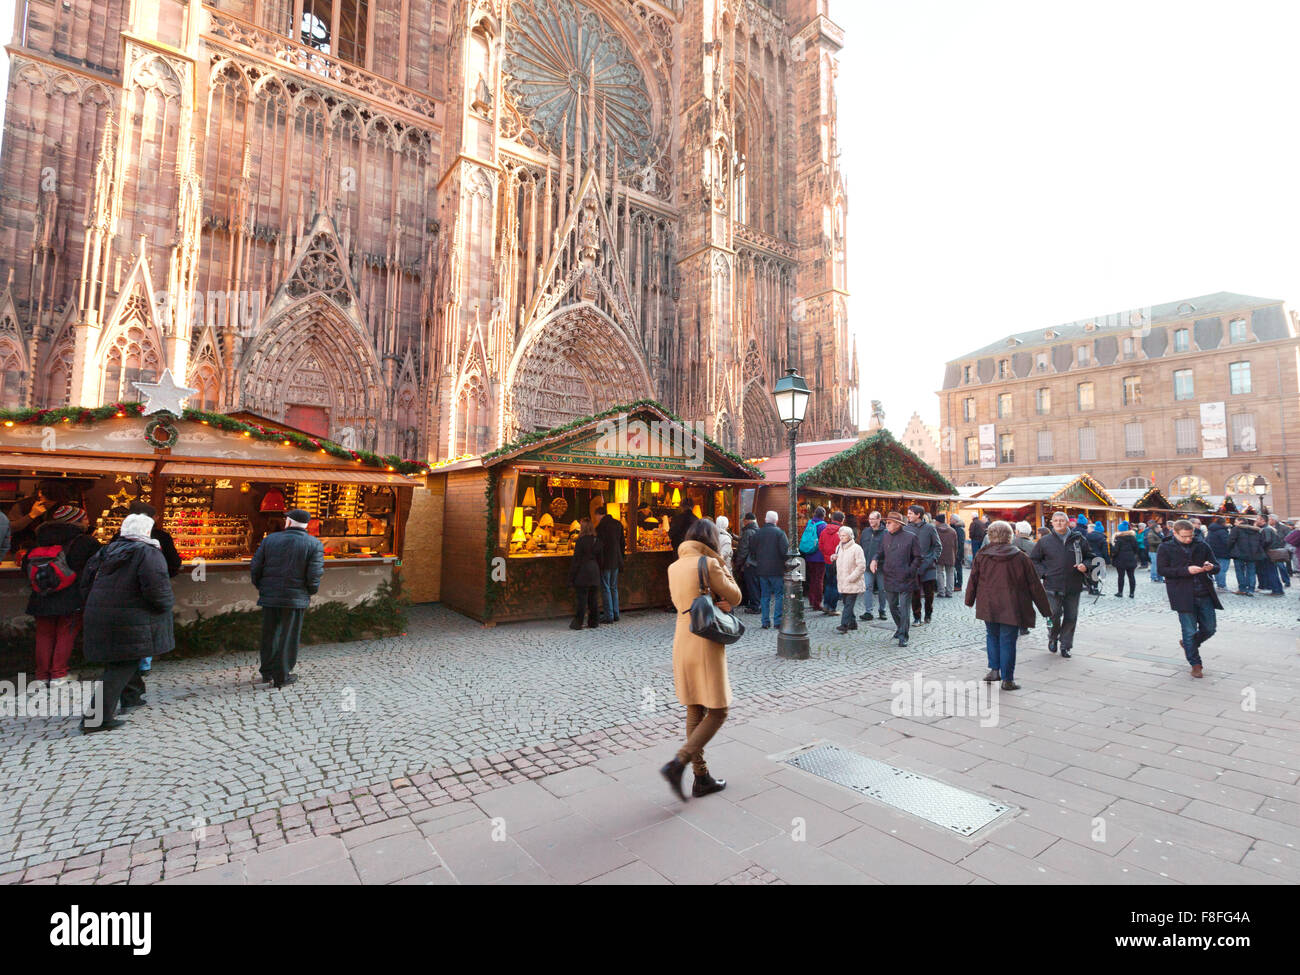 Straßburger Weihnachtsmarkt am Straßburger Münster, Straßburg Elsass Frankreich Europa Stockfoto